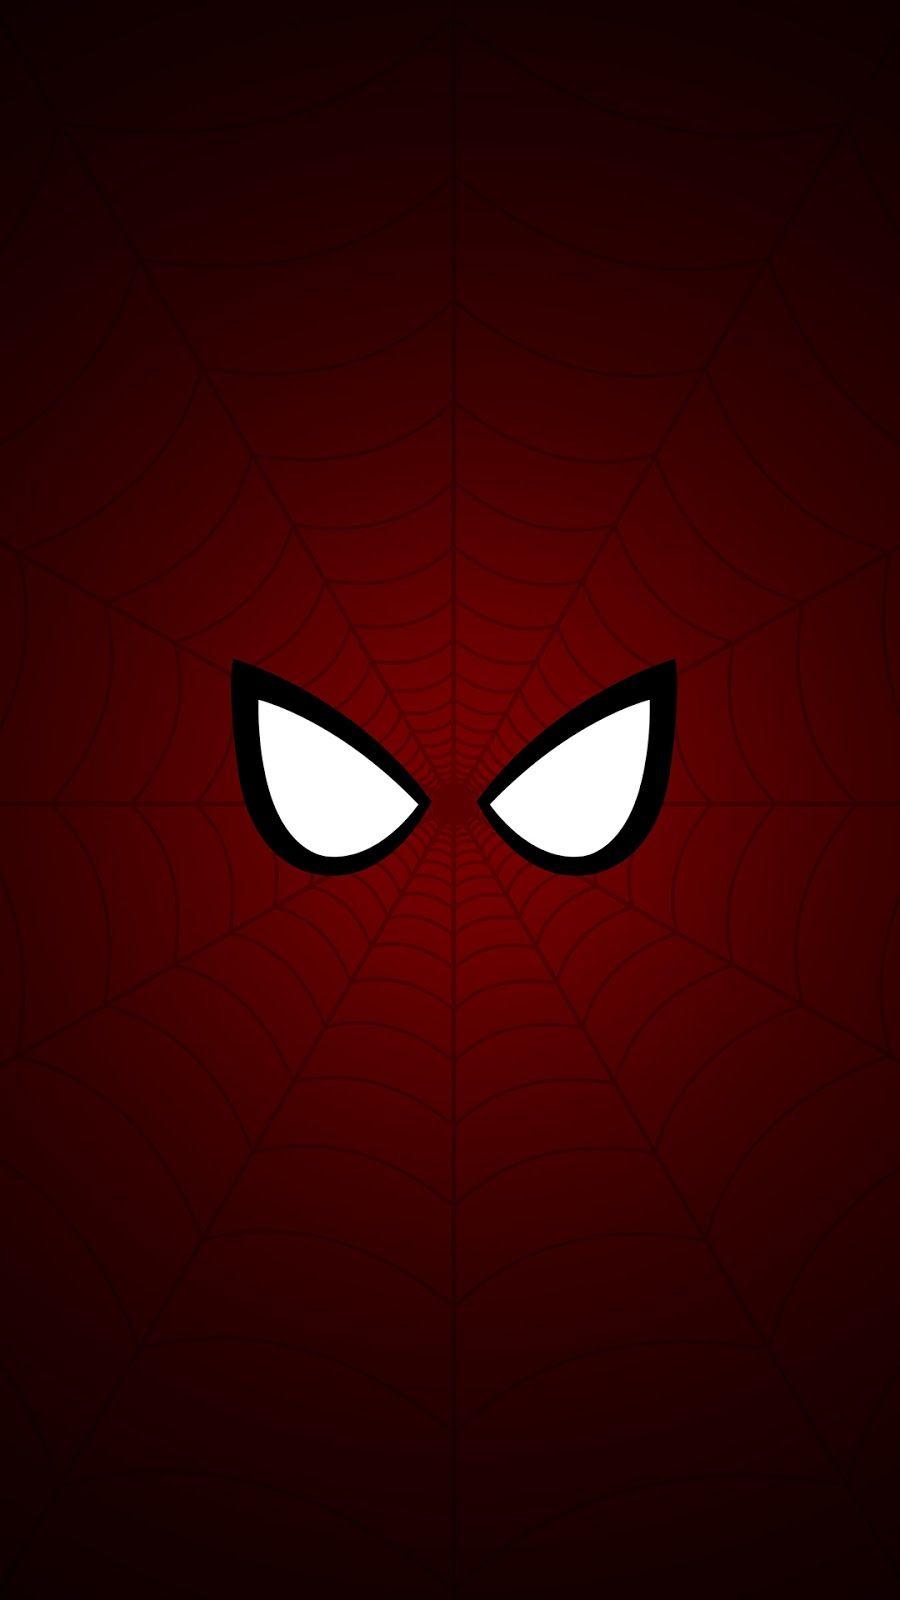 Free Wallpaper Phone: Spiderman Wallpaper iphone 6S Plus